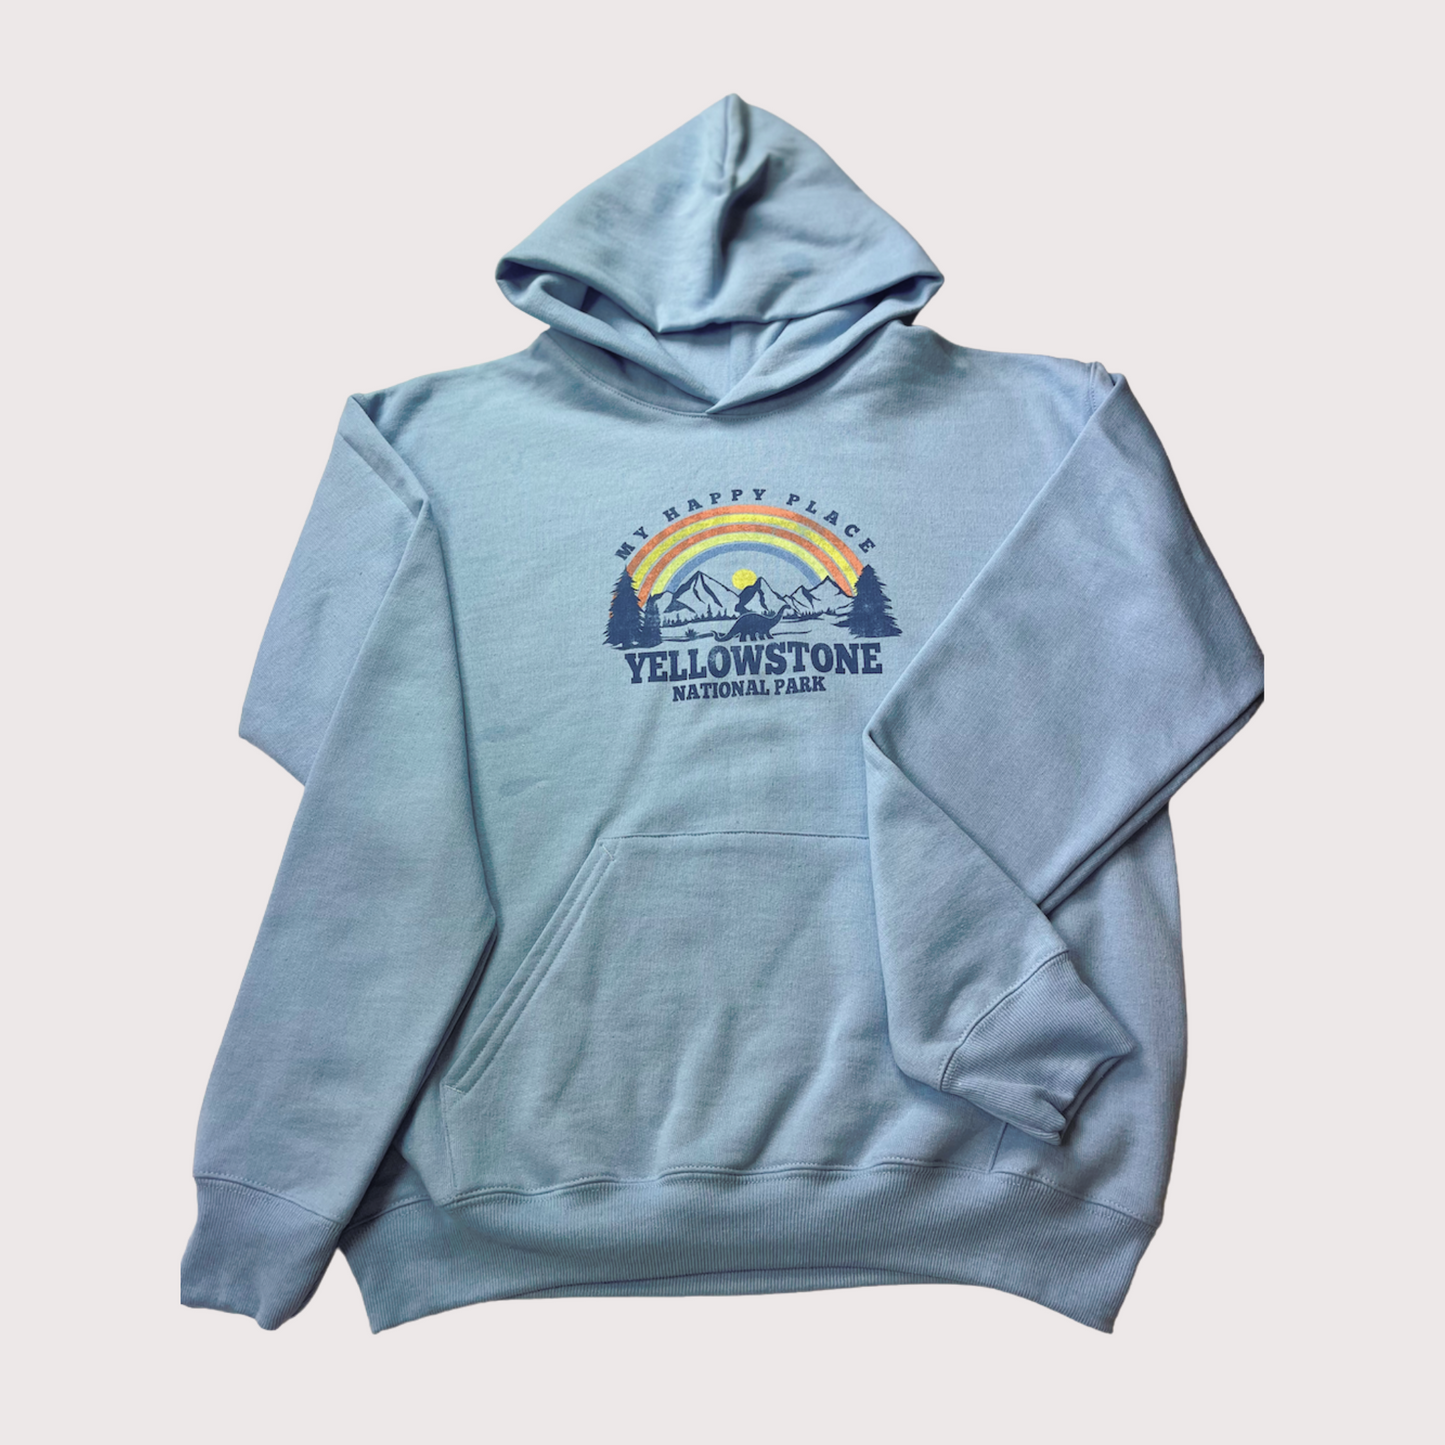 Sinclair Yellowstone Youth Sweatshirt